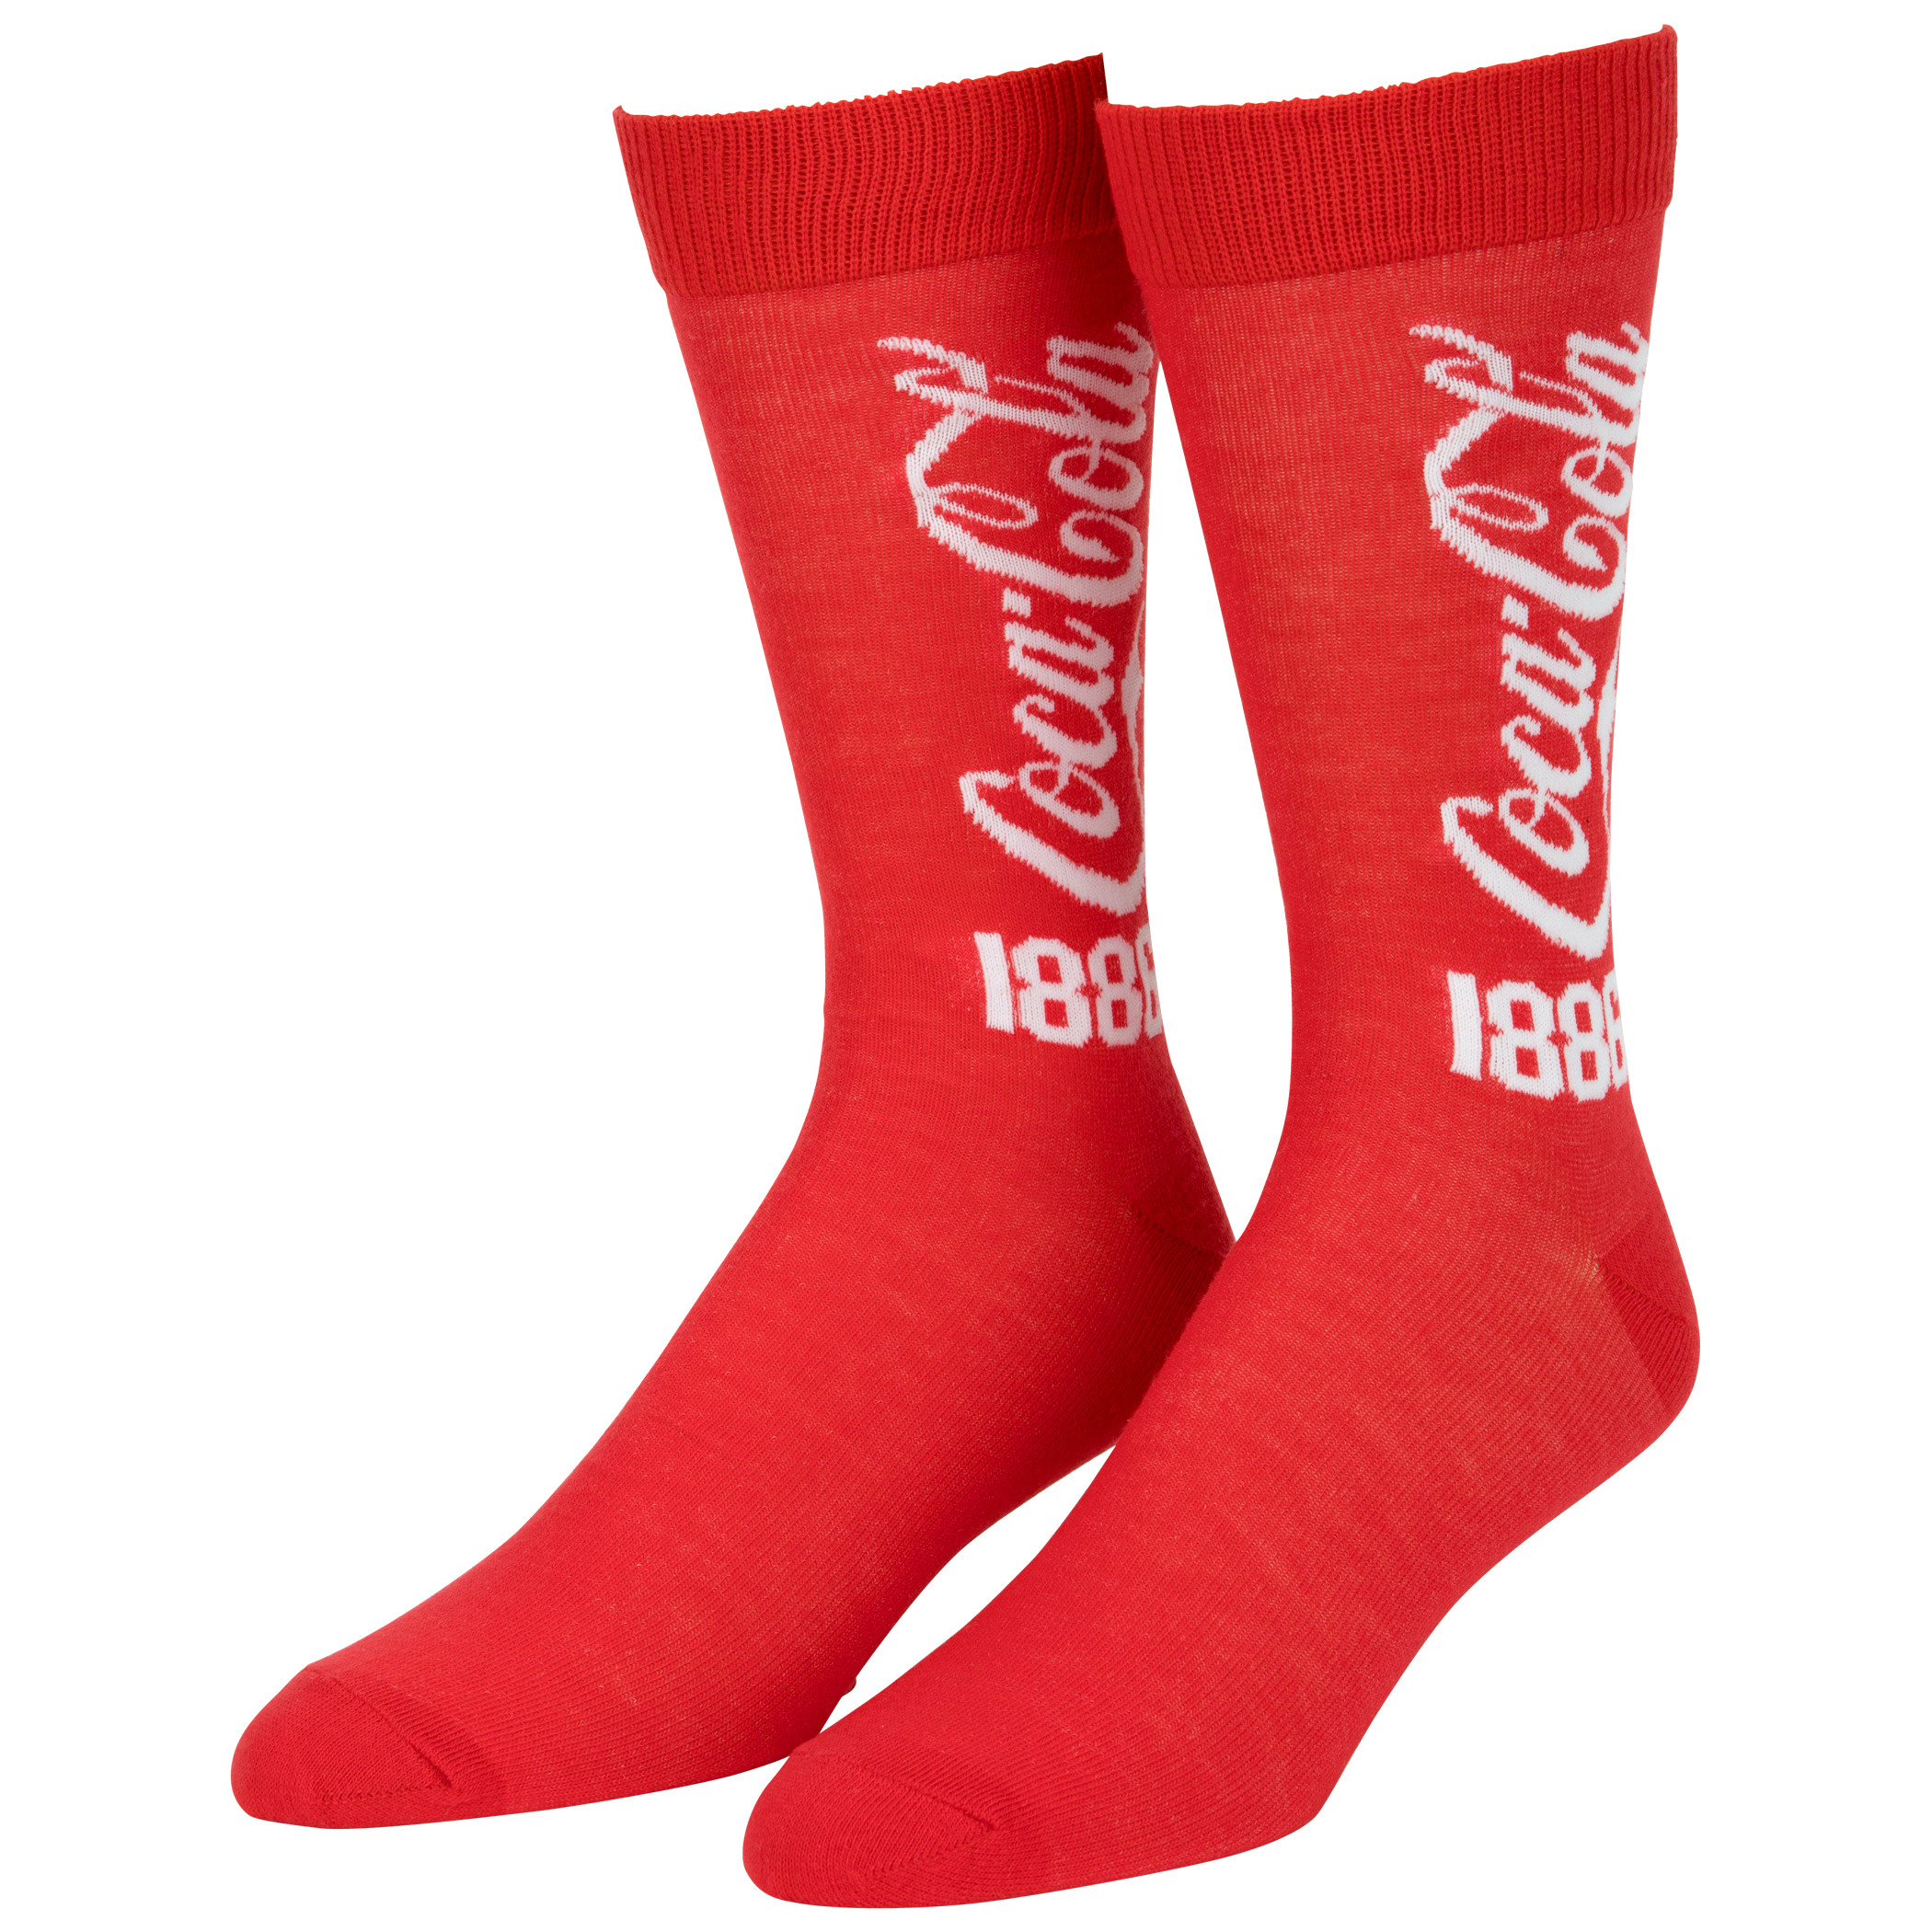 Coca-Cola 1886 Logo Crew Socks